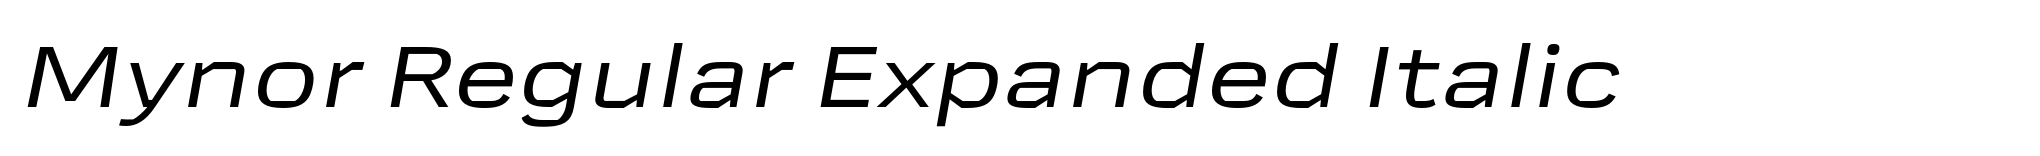 Mynor Regular Expanded Italic image